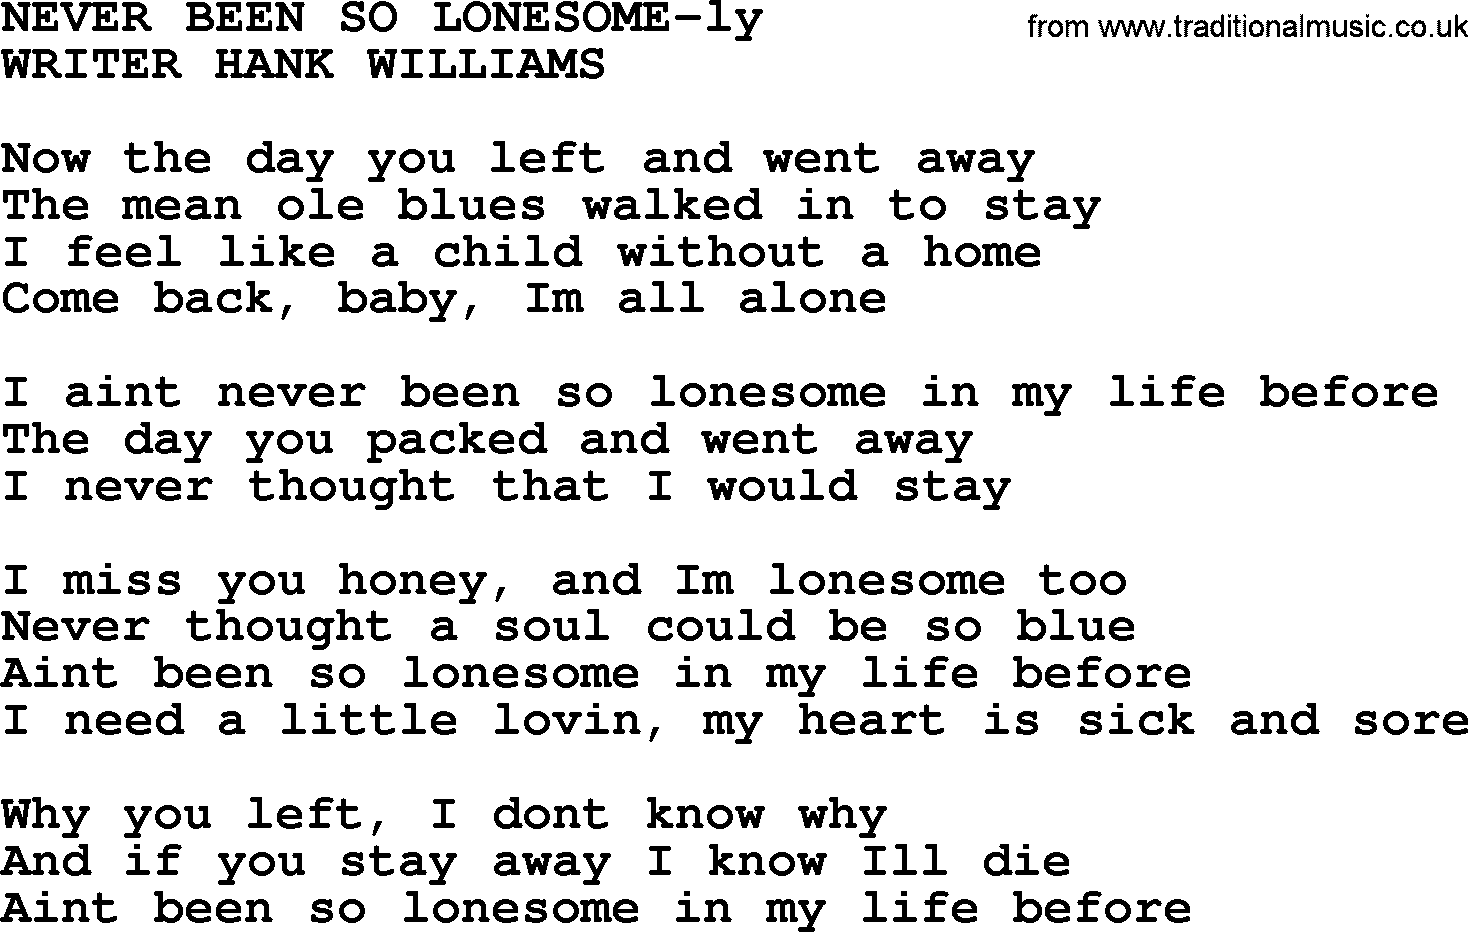 Hank Williams song Never Been So Lonesome, lyrics